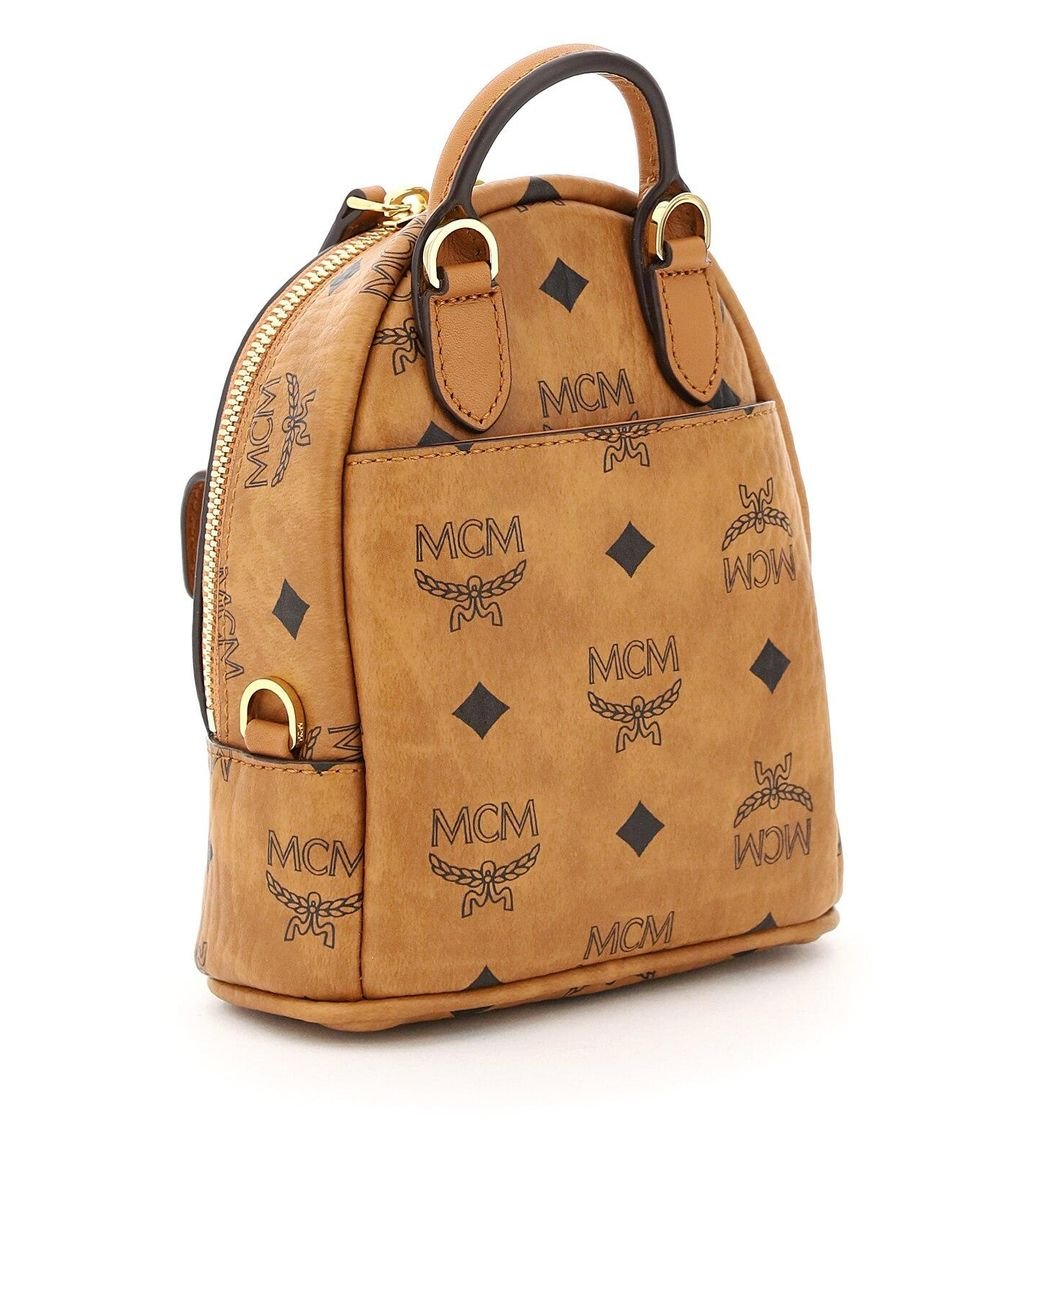 MCM Mini Bag Visetos Patricia Backpack in Brown